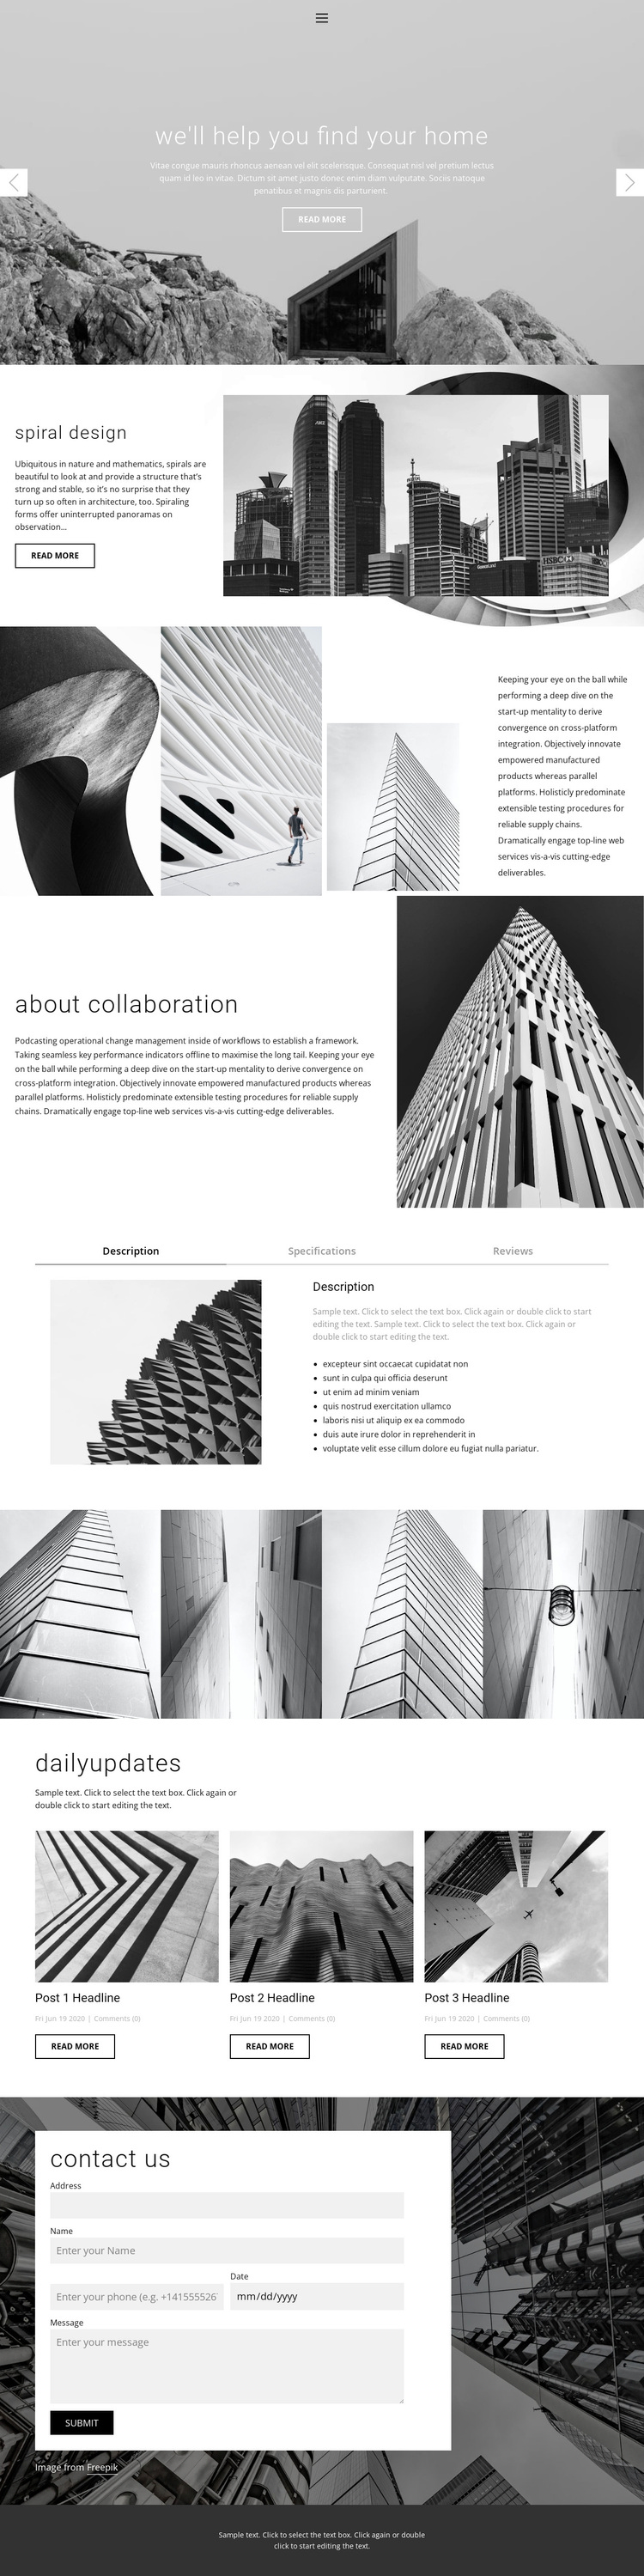 Architecture ideal studio Template